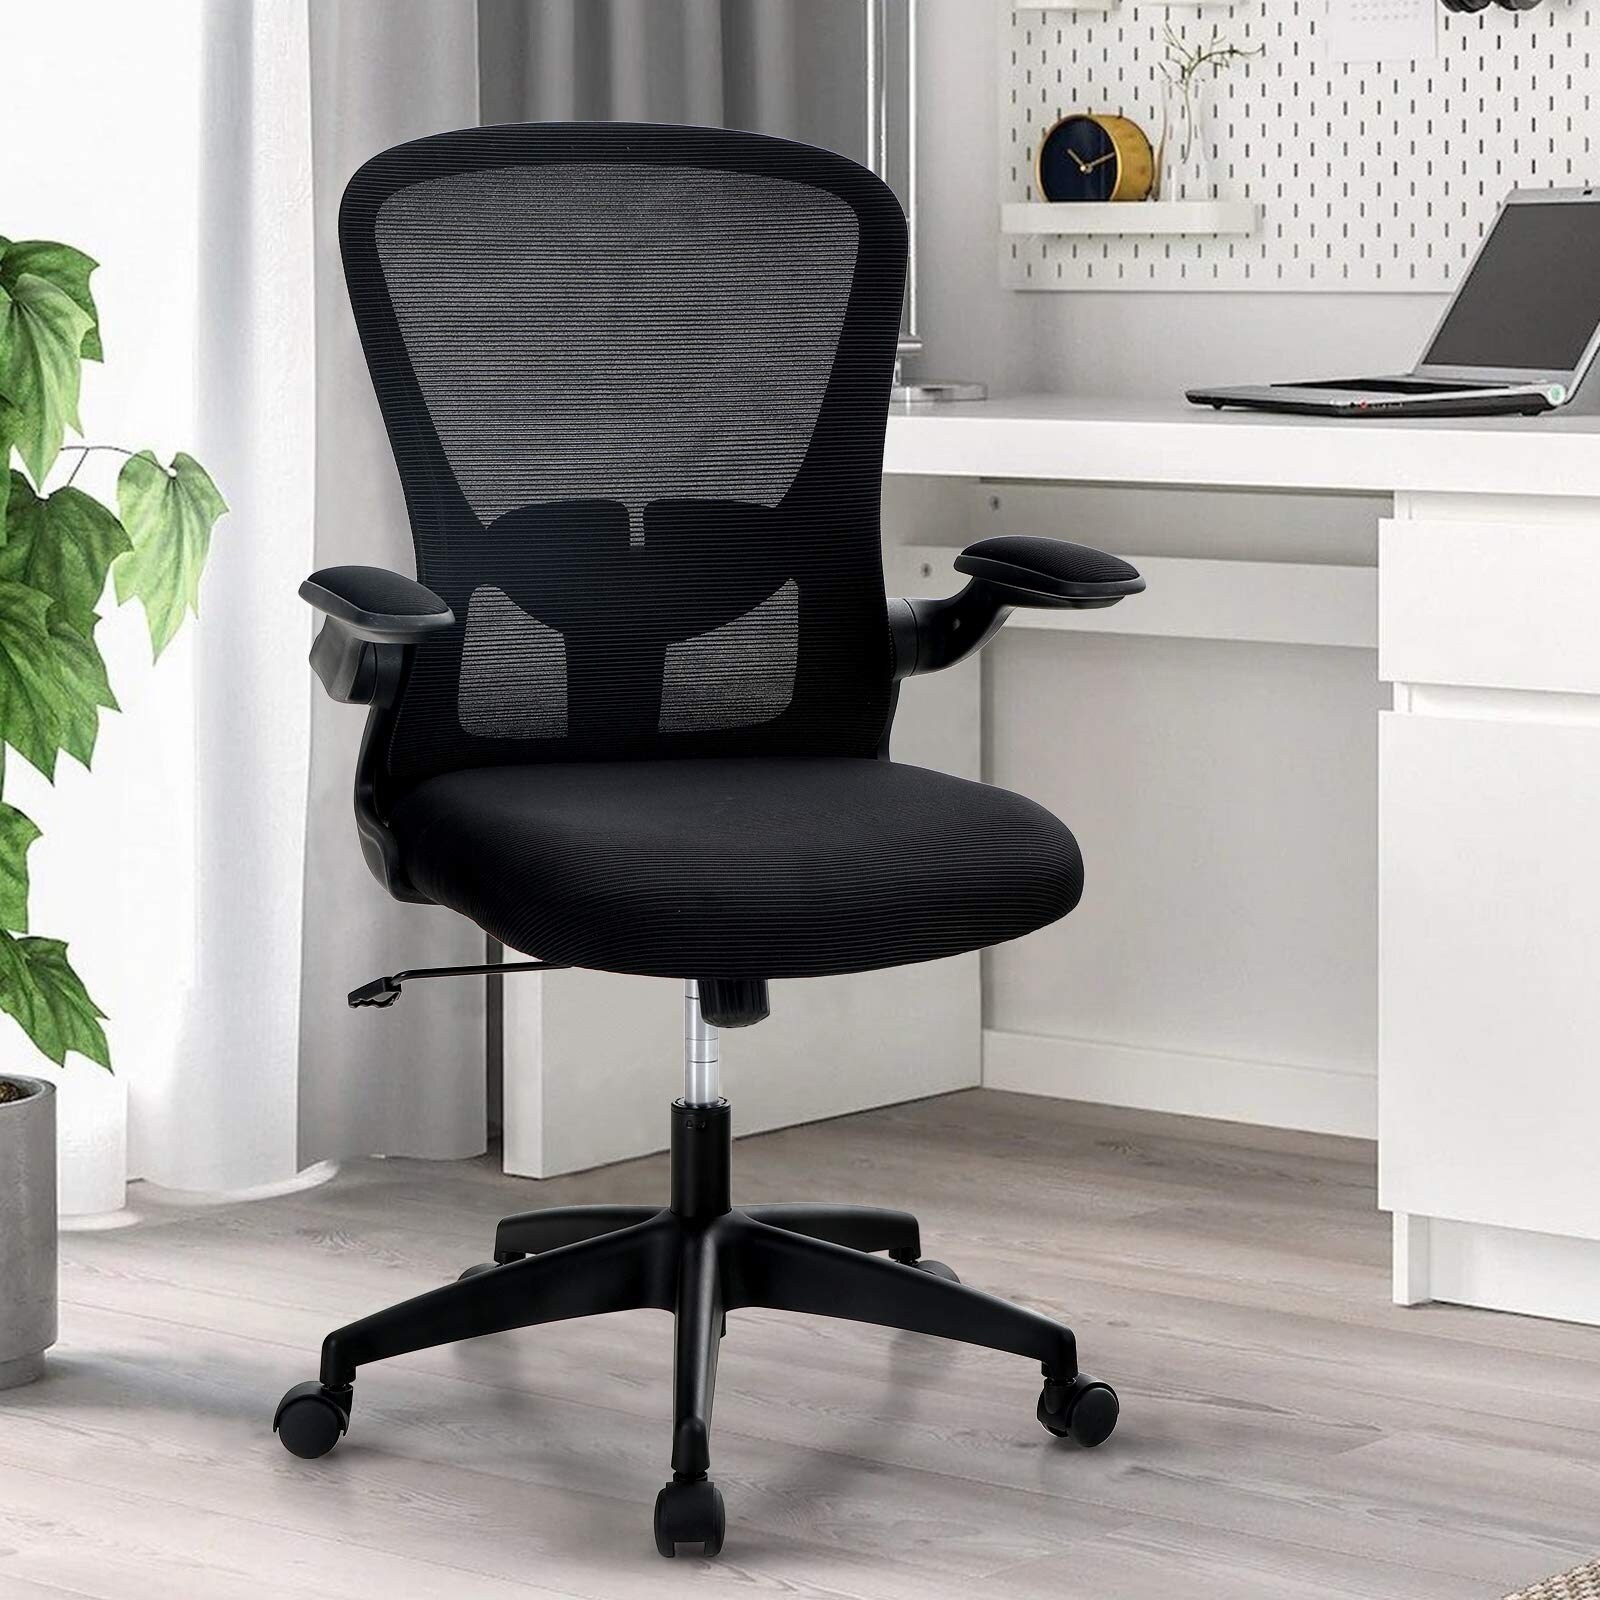 Office Mesh Chairs Ergonomic 360° Swivel Lift Computer Desk Adjustable Height UK 